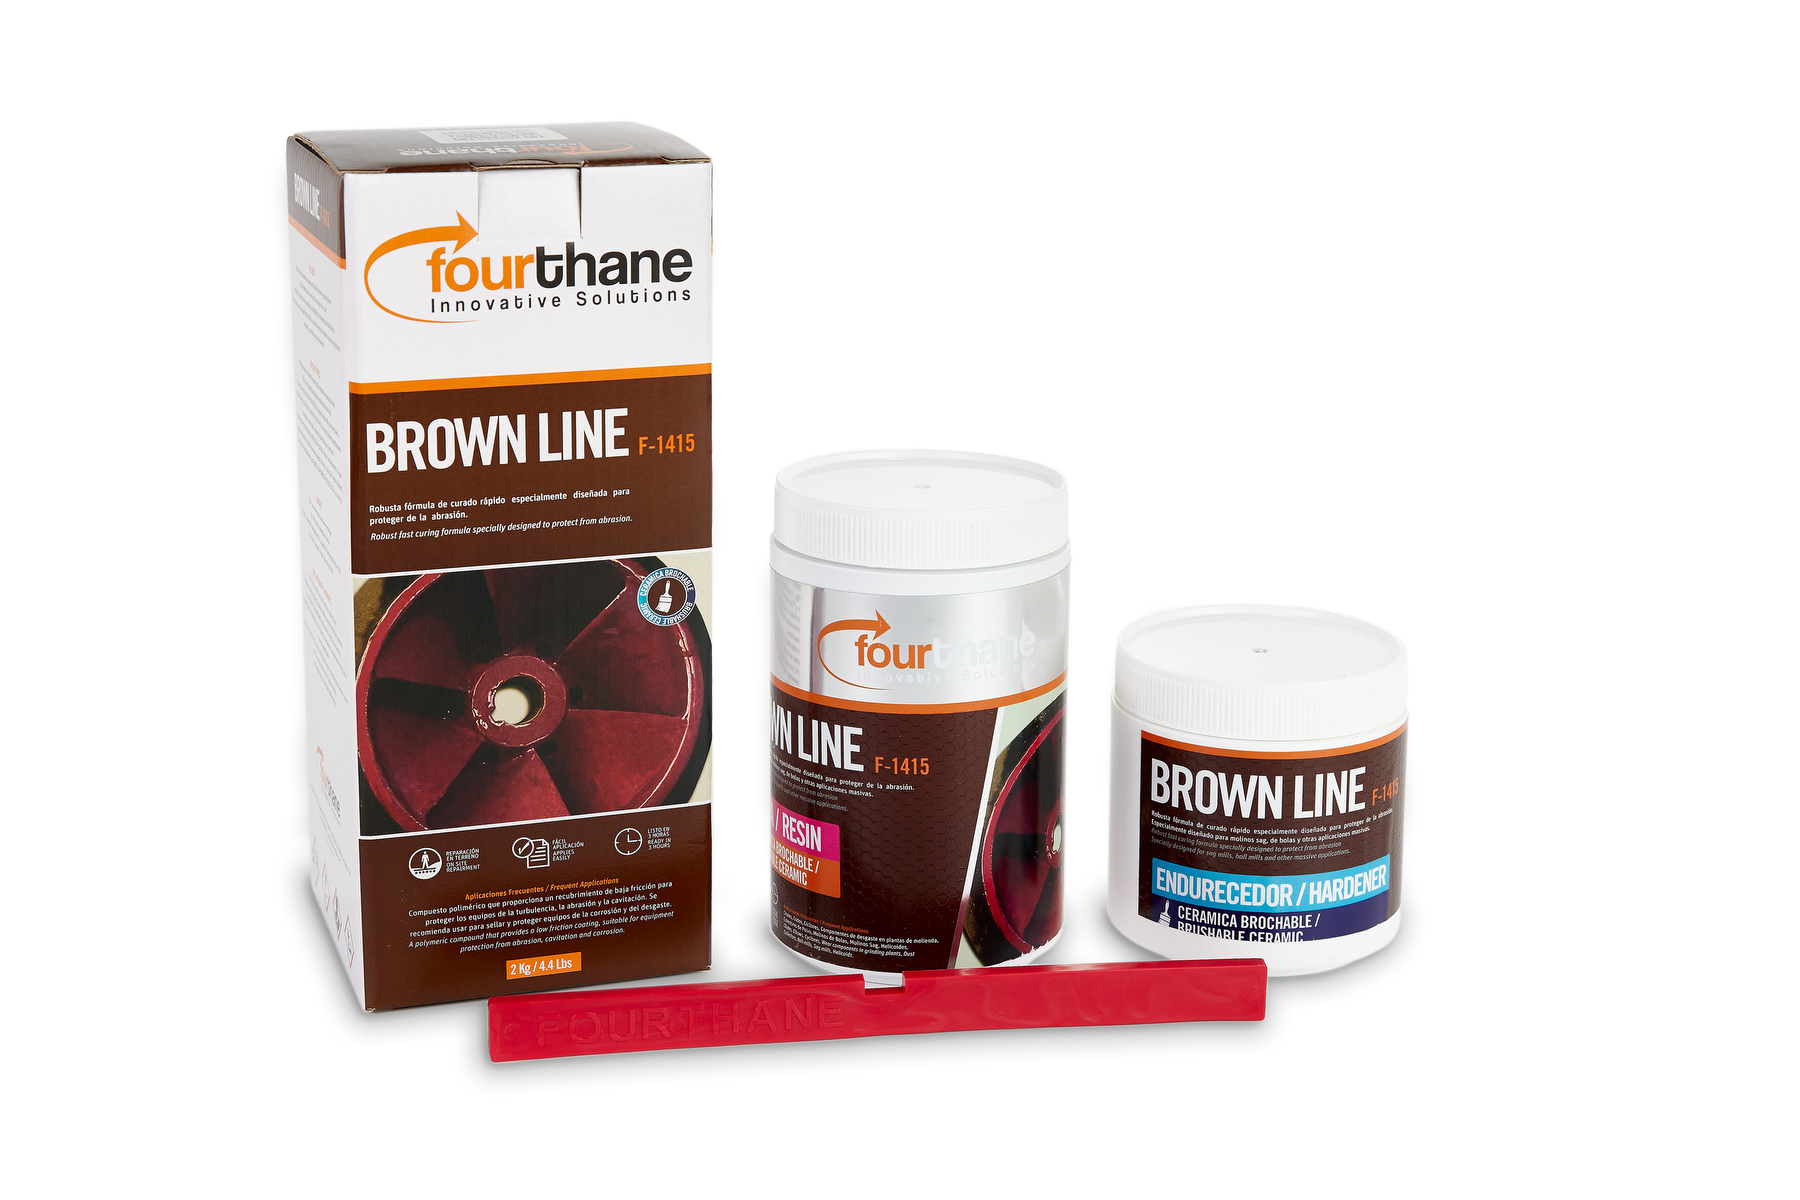 Fourthane Brown Line